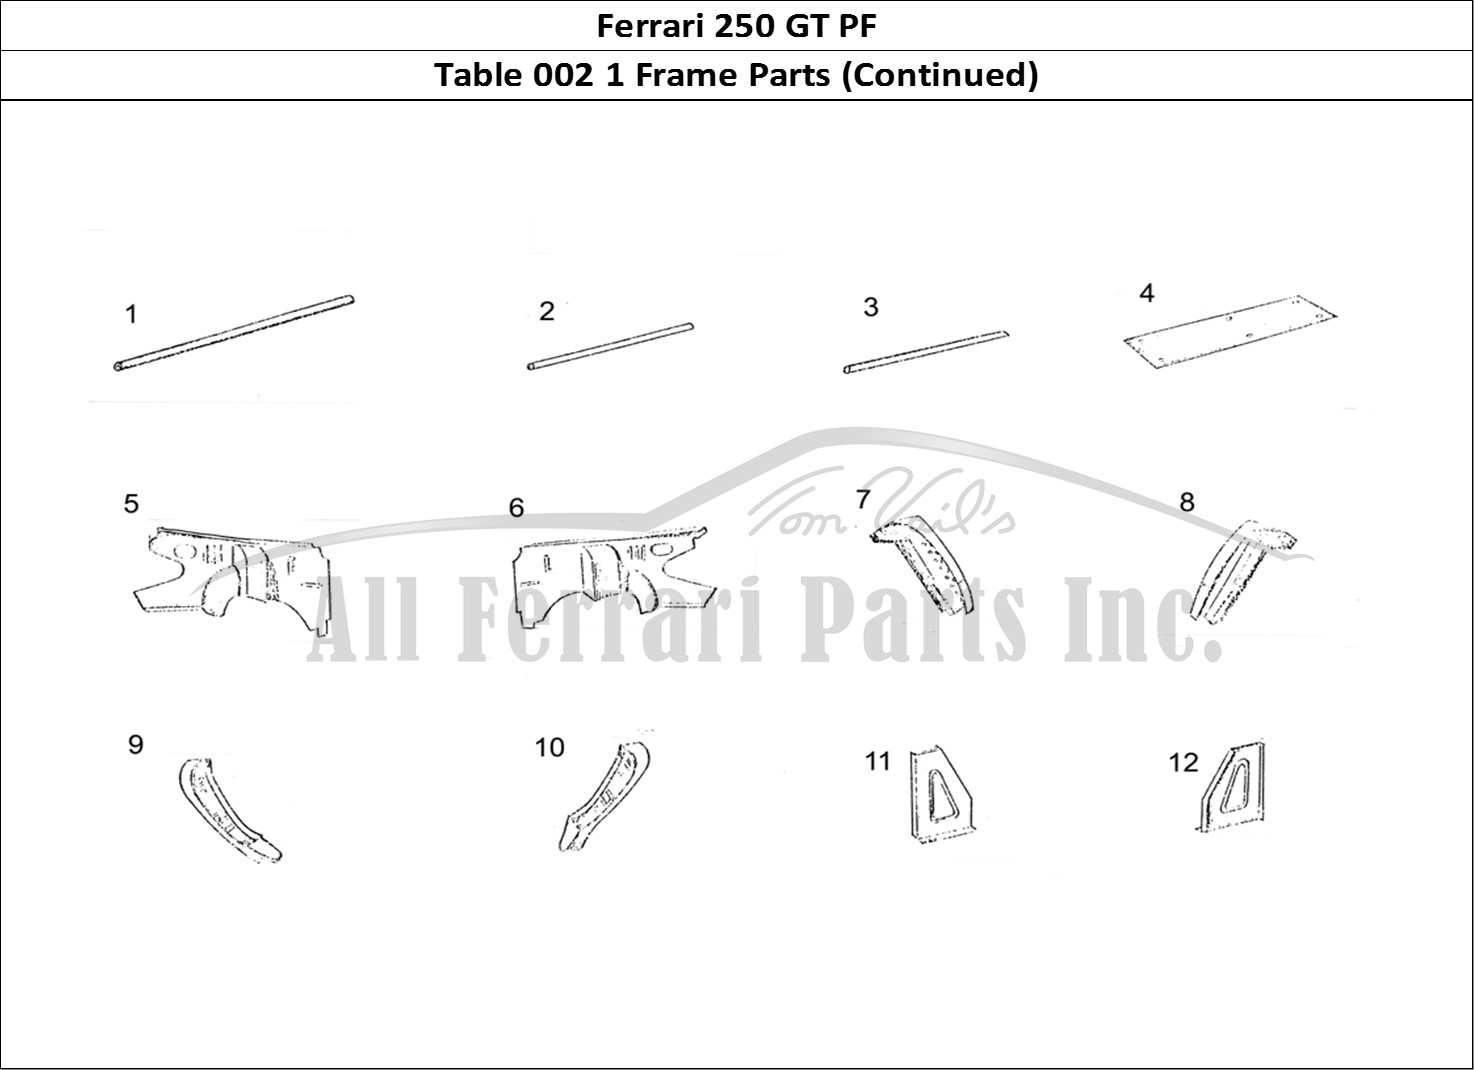 Ferrari Parts Ferrari 250 GT (Coachwork) Page 002 Chassis Parts (continued)